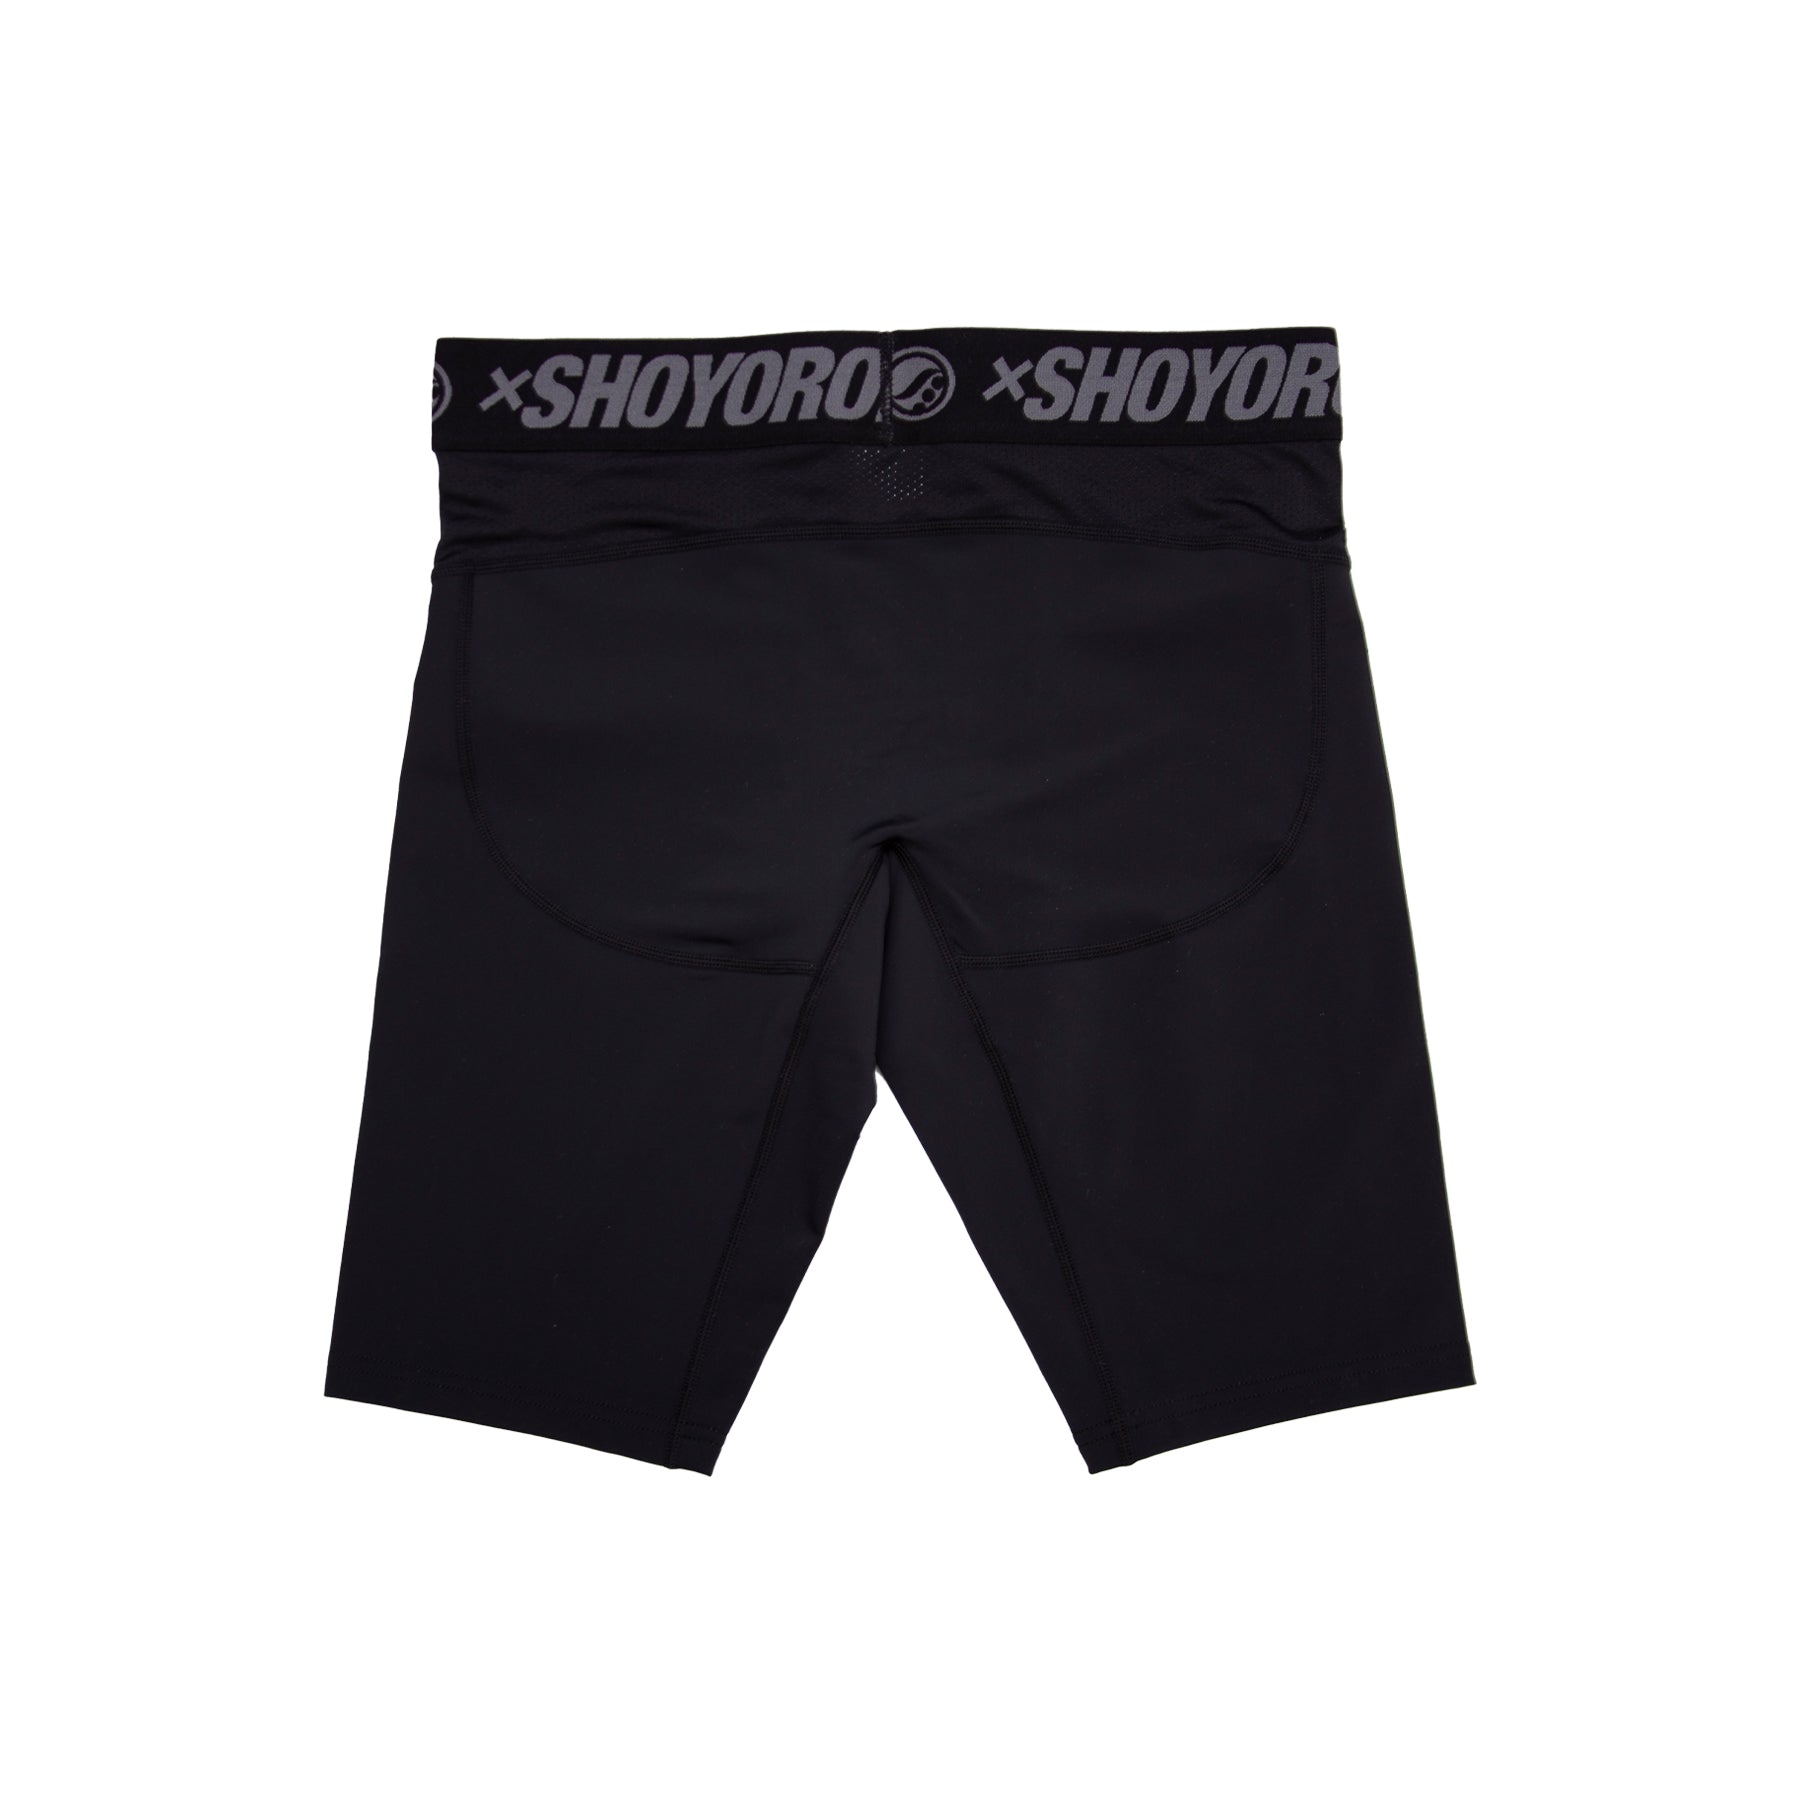 Compression Shorts